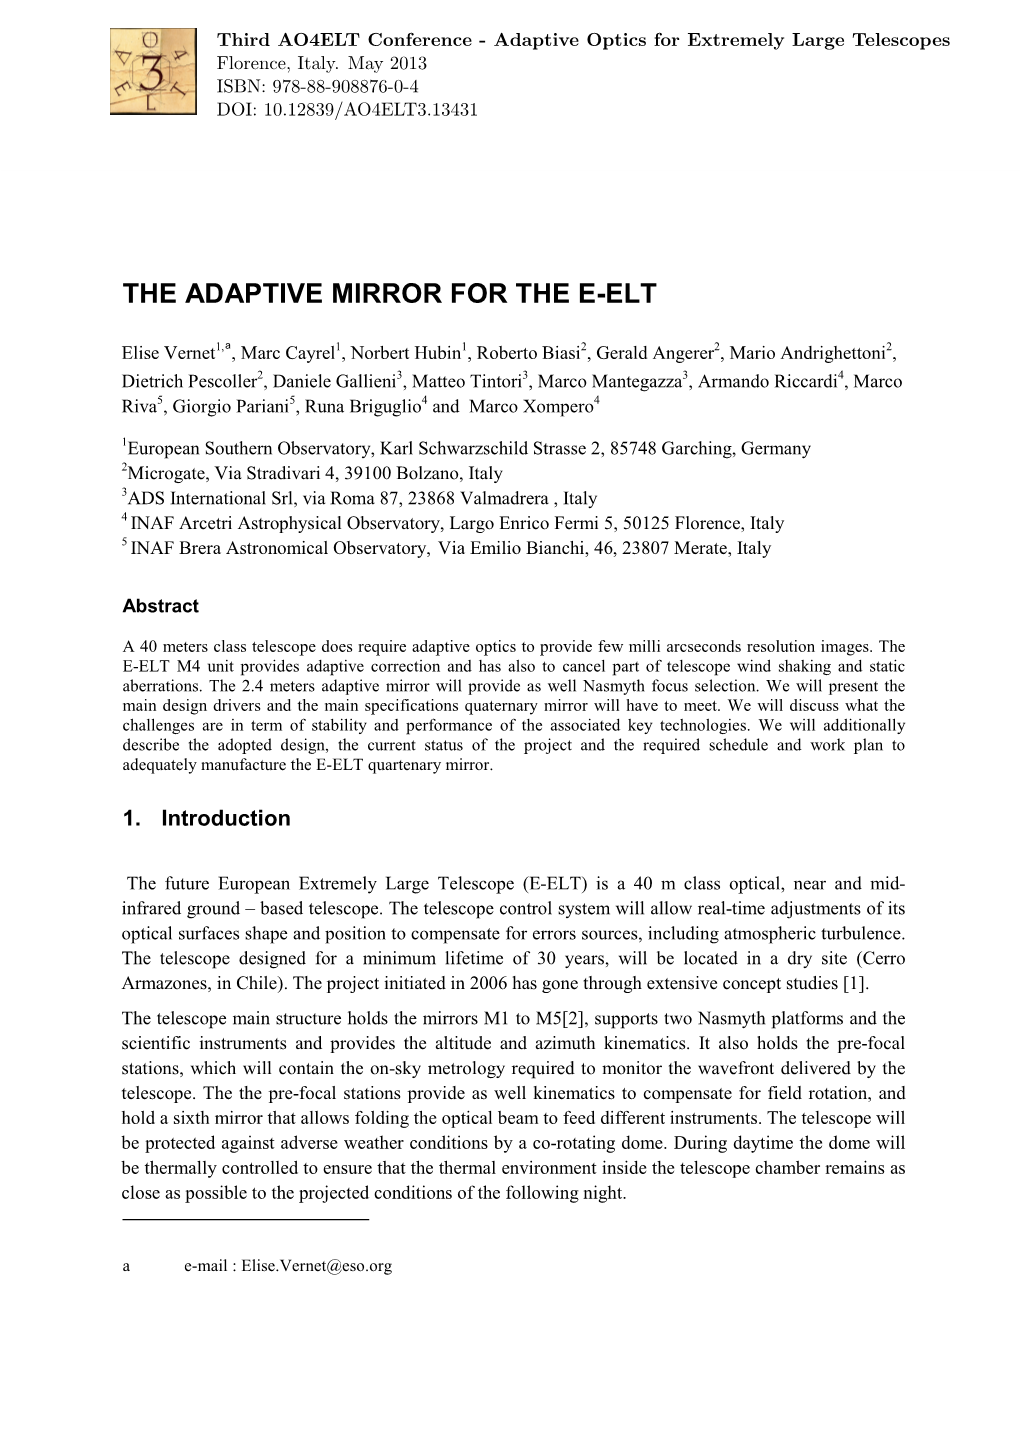 The Adaptive Mirror for the E-Elt